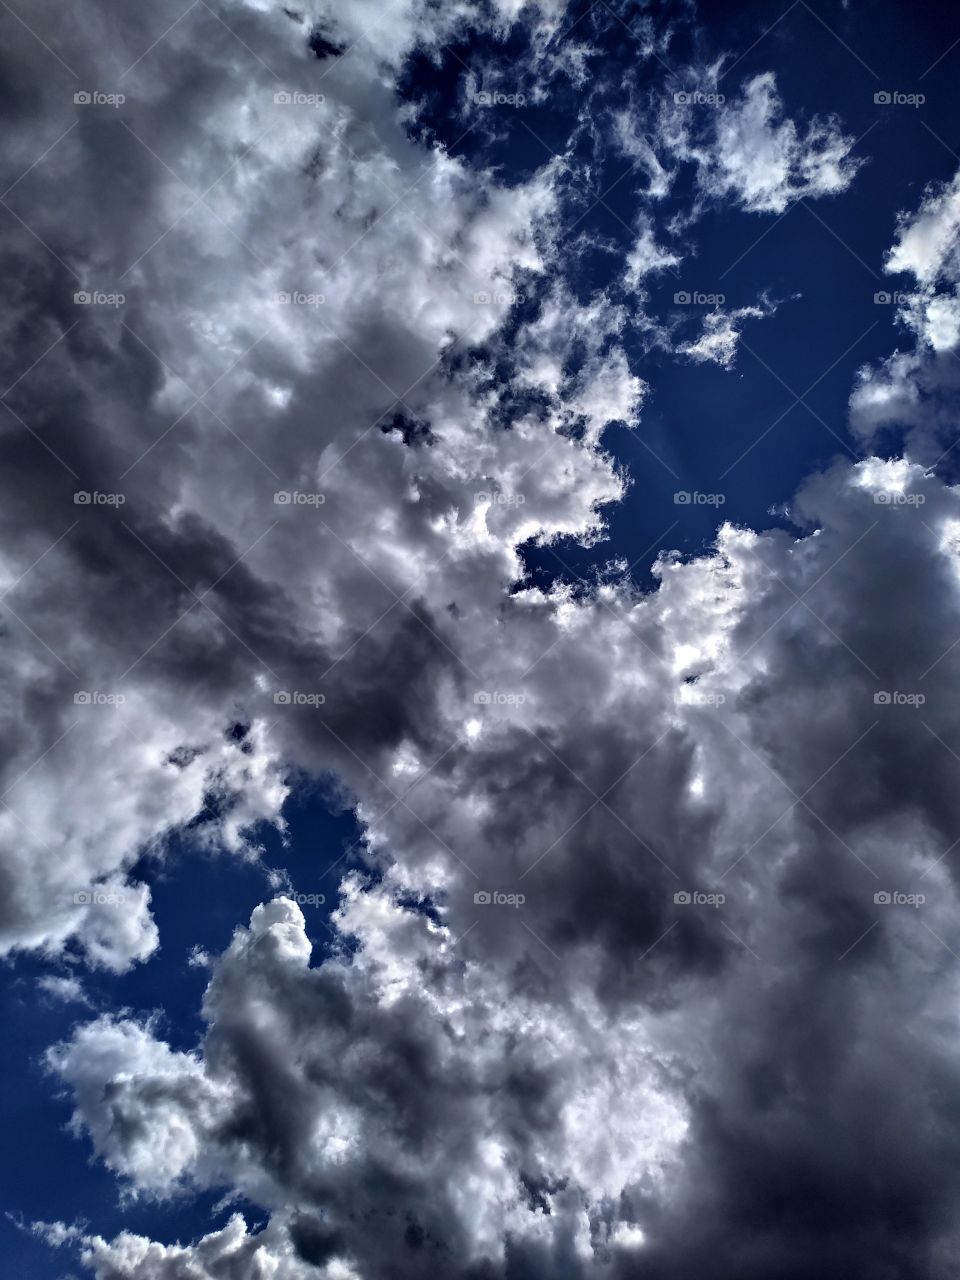 the clouds
облака